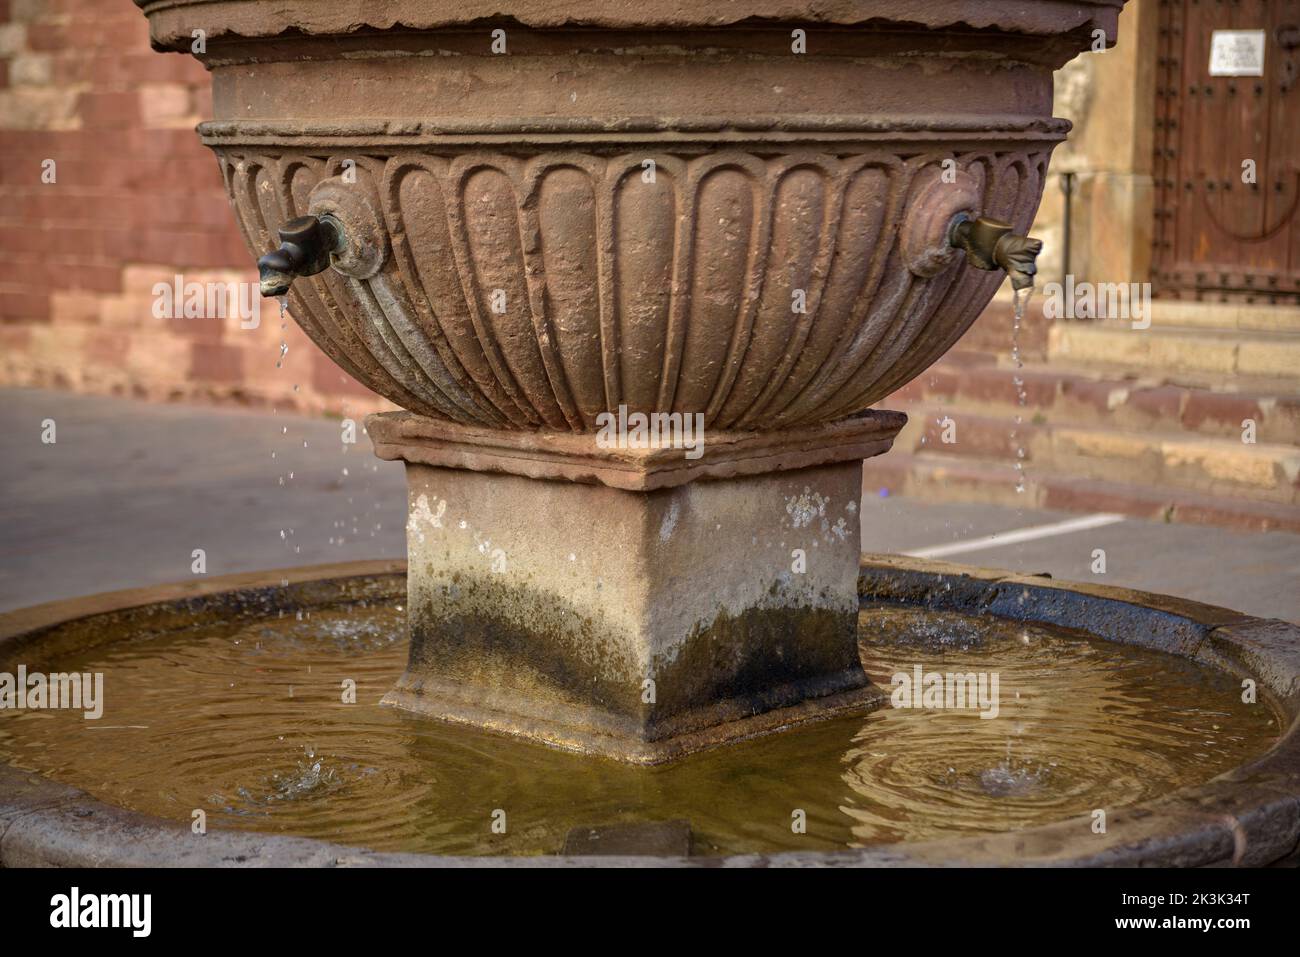 Fontaine Renaissance sur la place principale de Prades (Baix Camp, Tarragone, Catalogne, Espagne) ESP: Fuente renacentista de la plaza Mayor de Prades España Banque D'Images